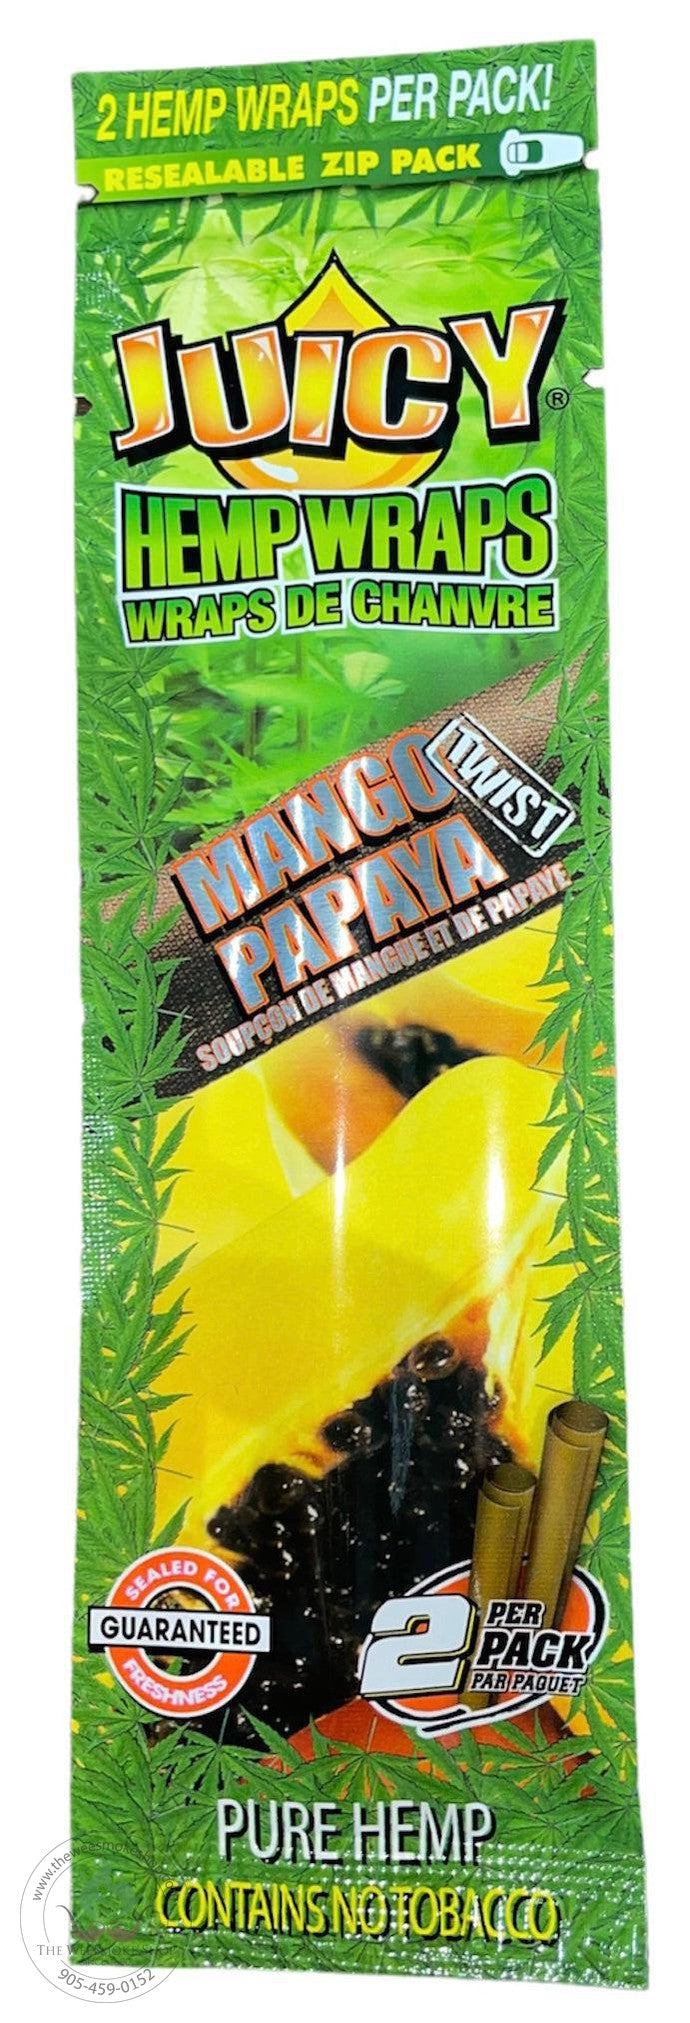 Juicy Jay Hemp Wraps - Mango Papaya Twist - The Wee Smoke Shop